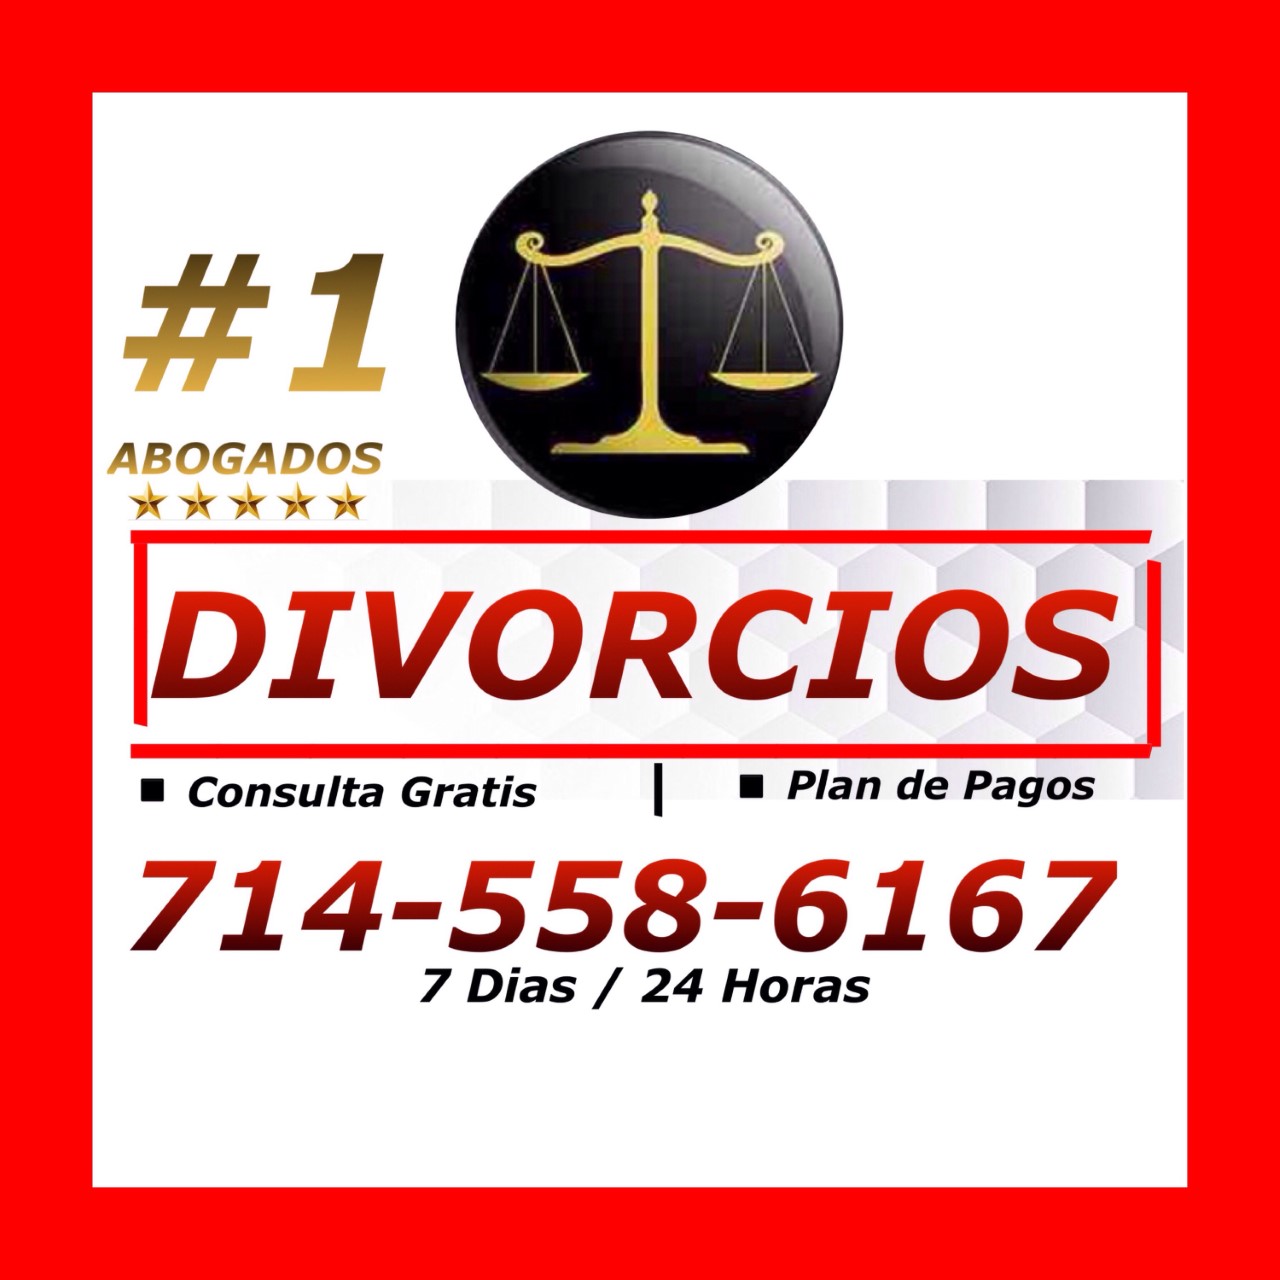 00001-DIVORCIOS2